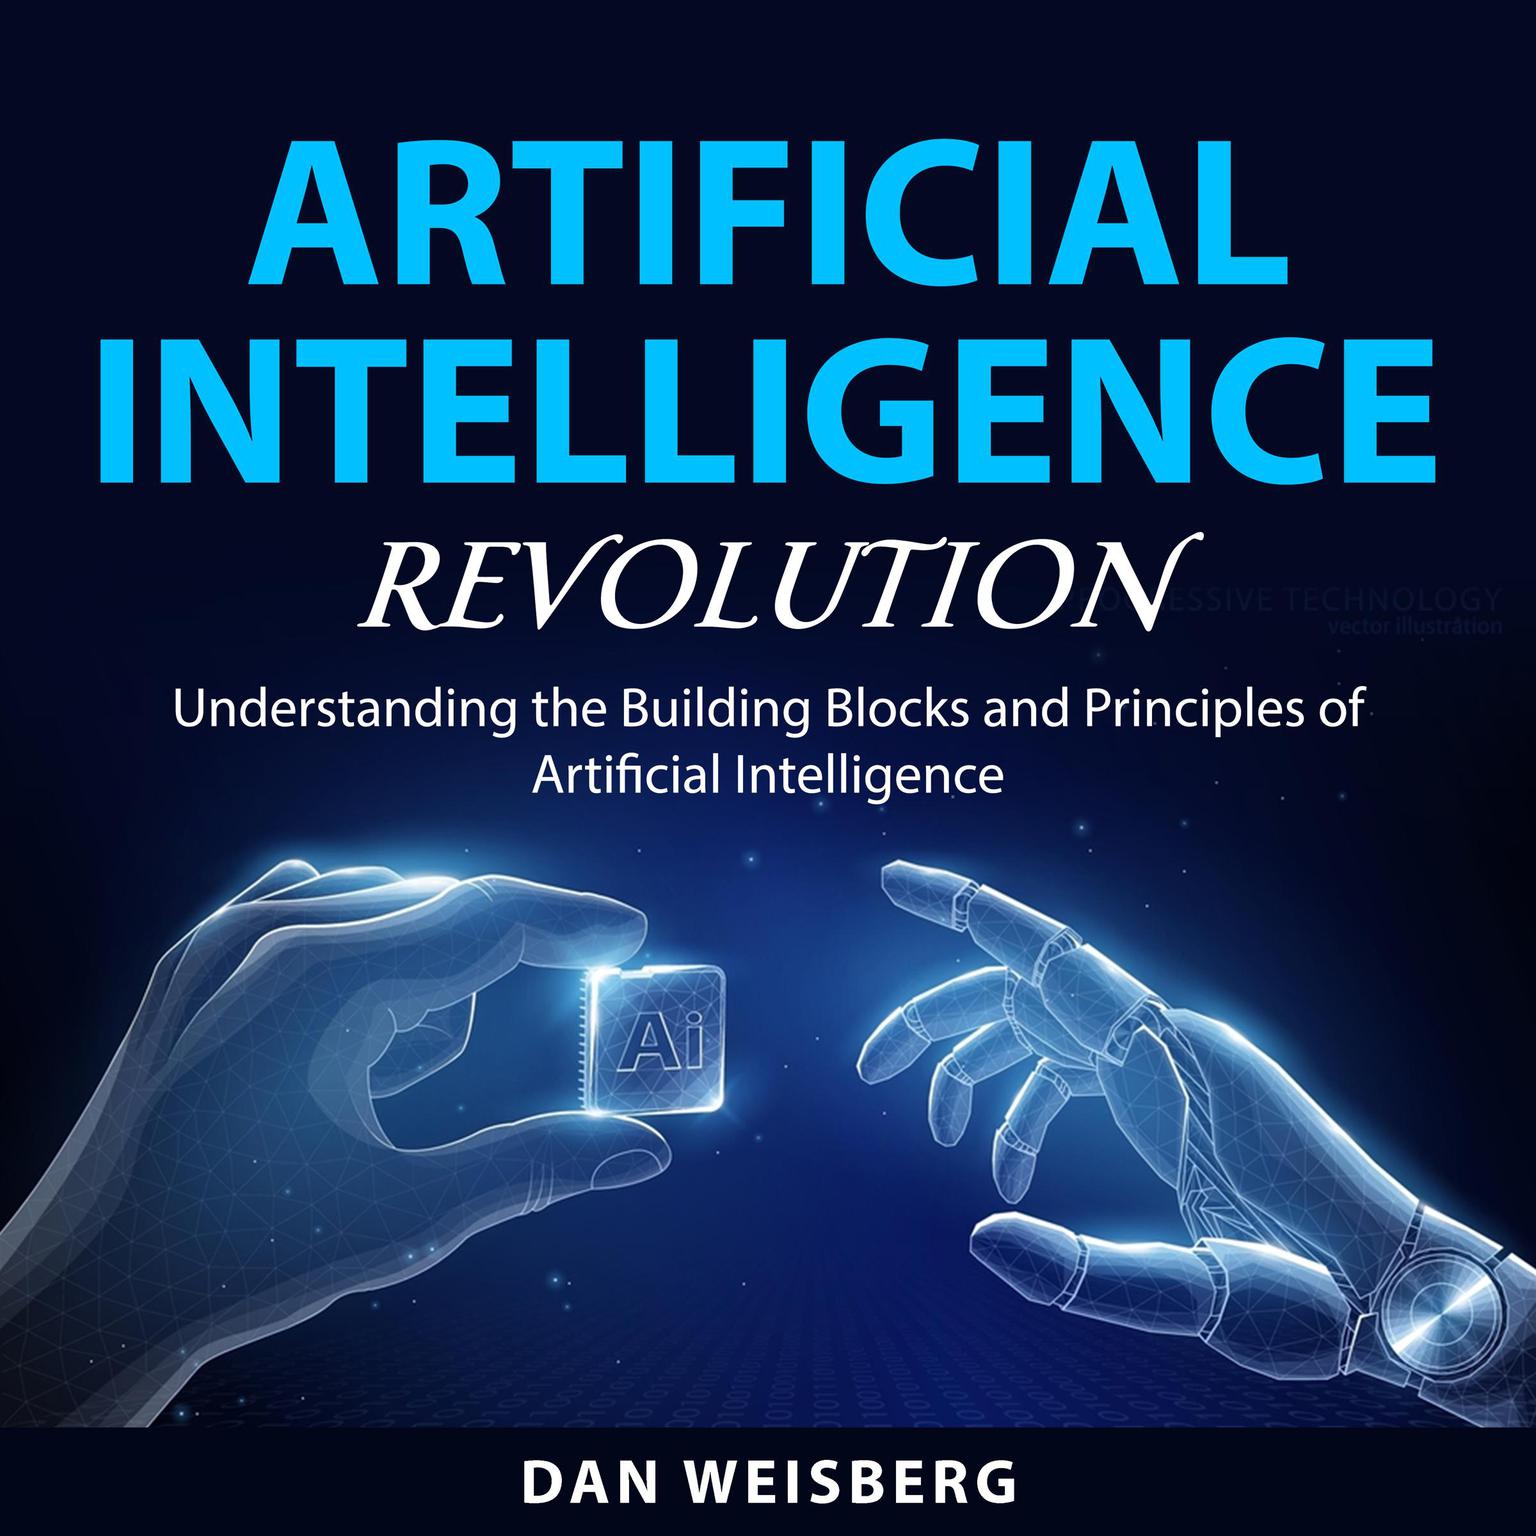 Artificial Intelligence Revolution Audiobook, by Dan Weisberg